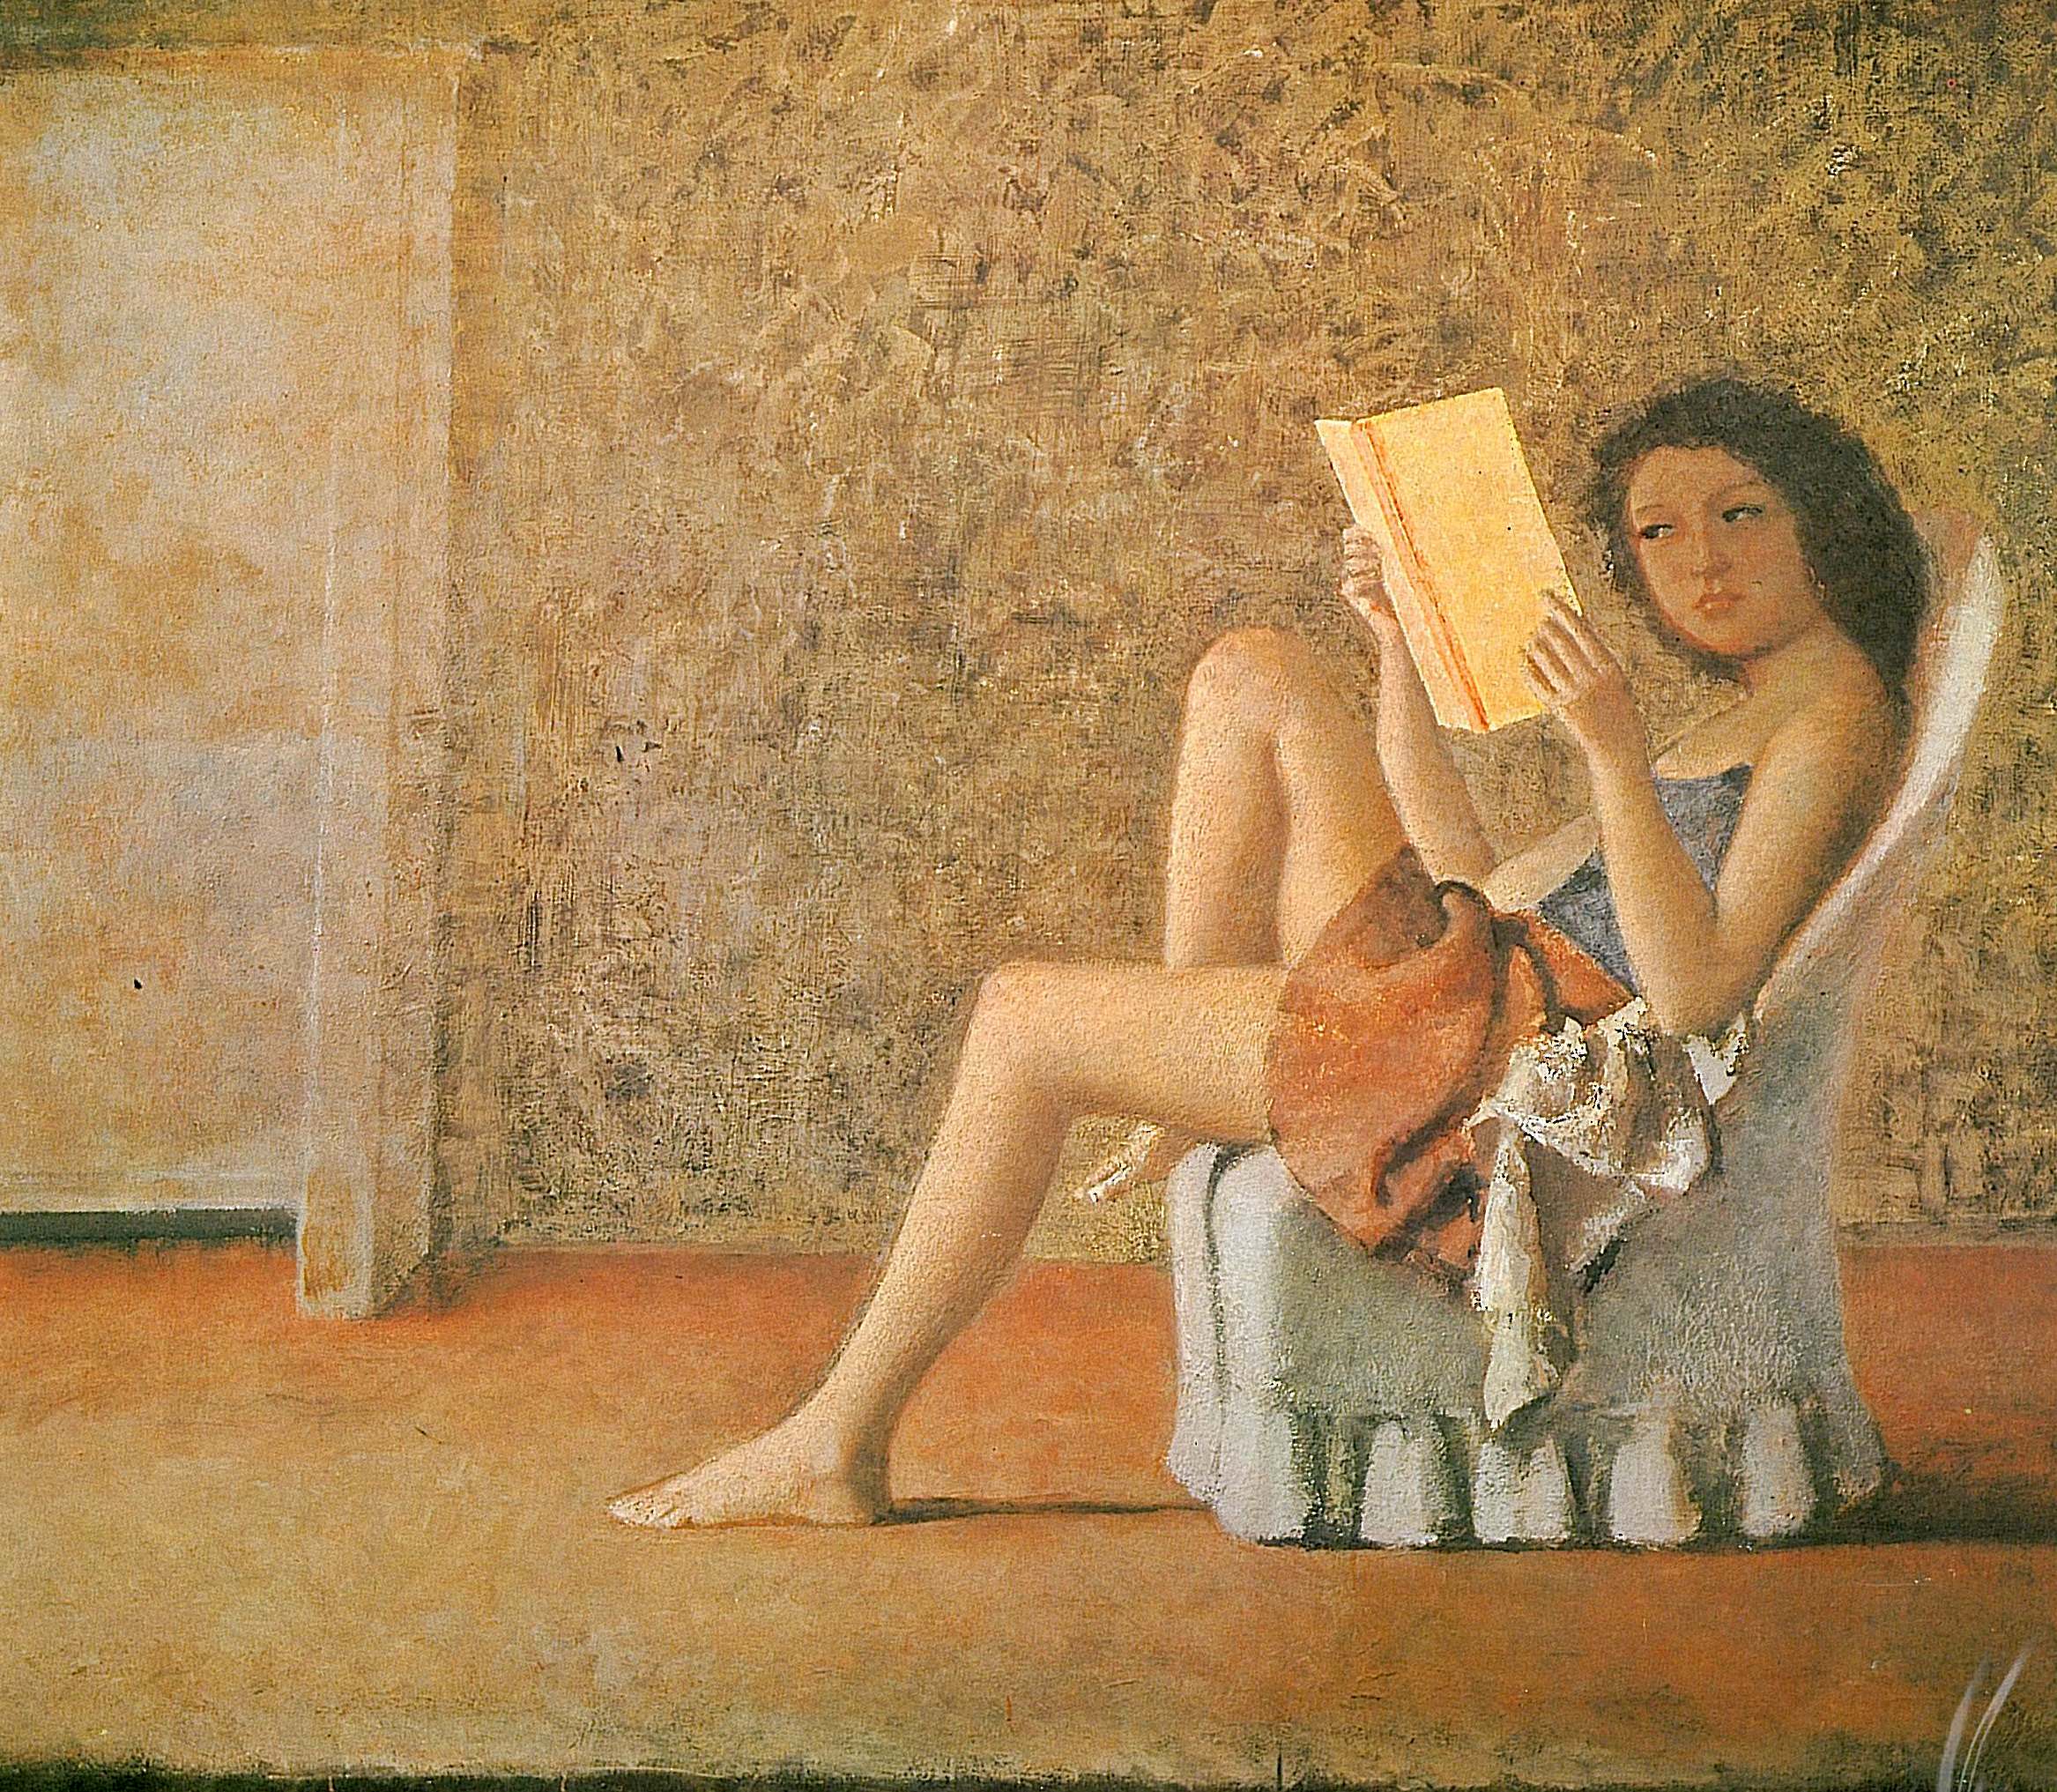 bal-katia-reading-1974